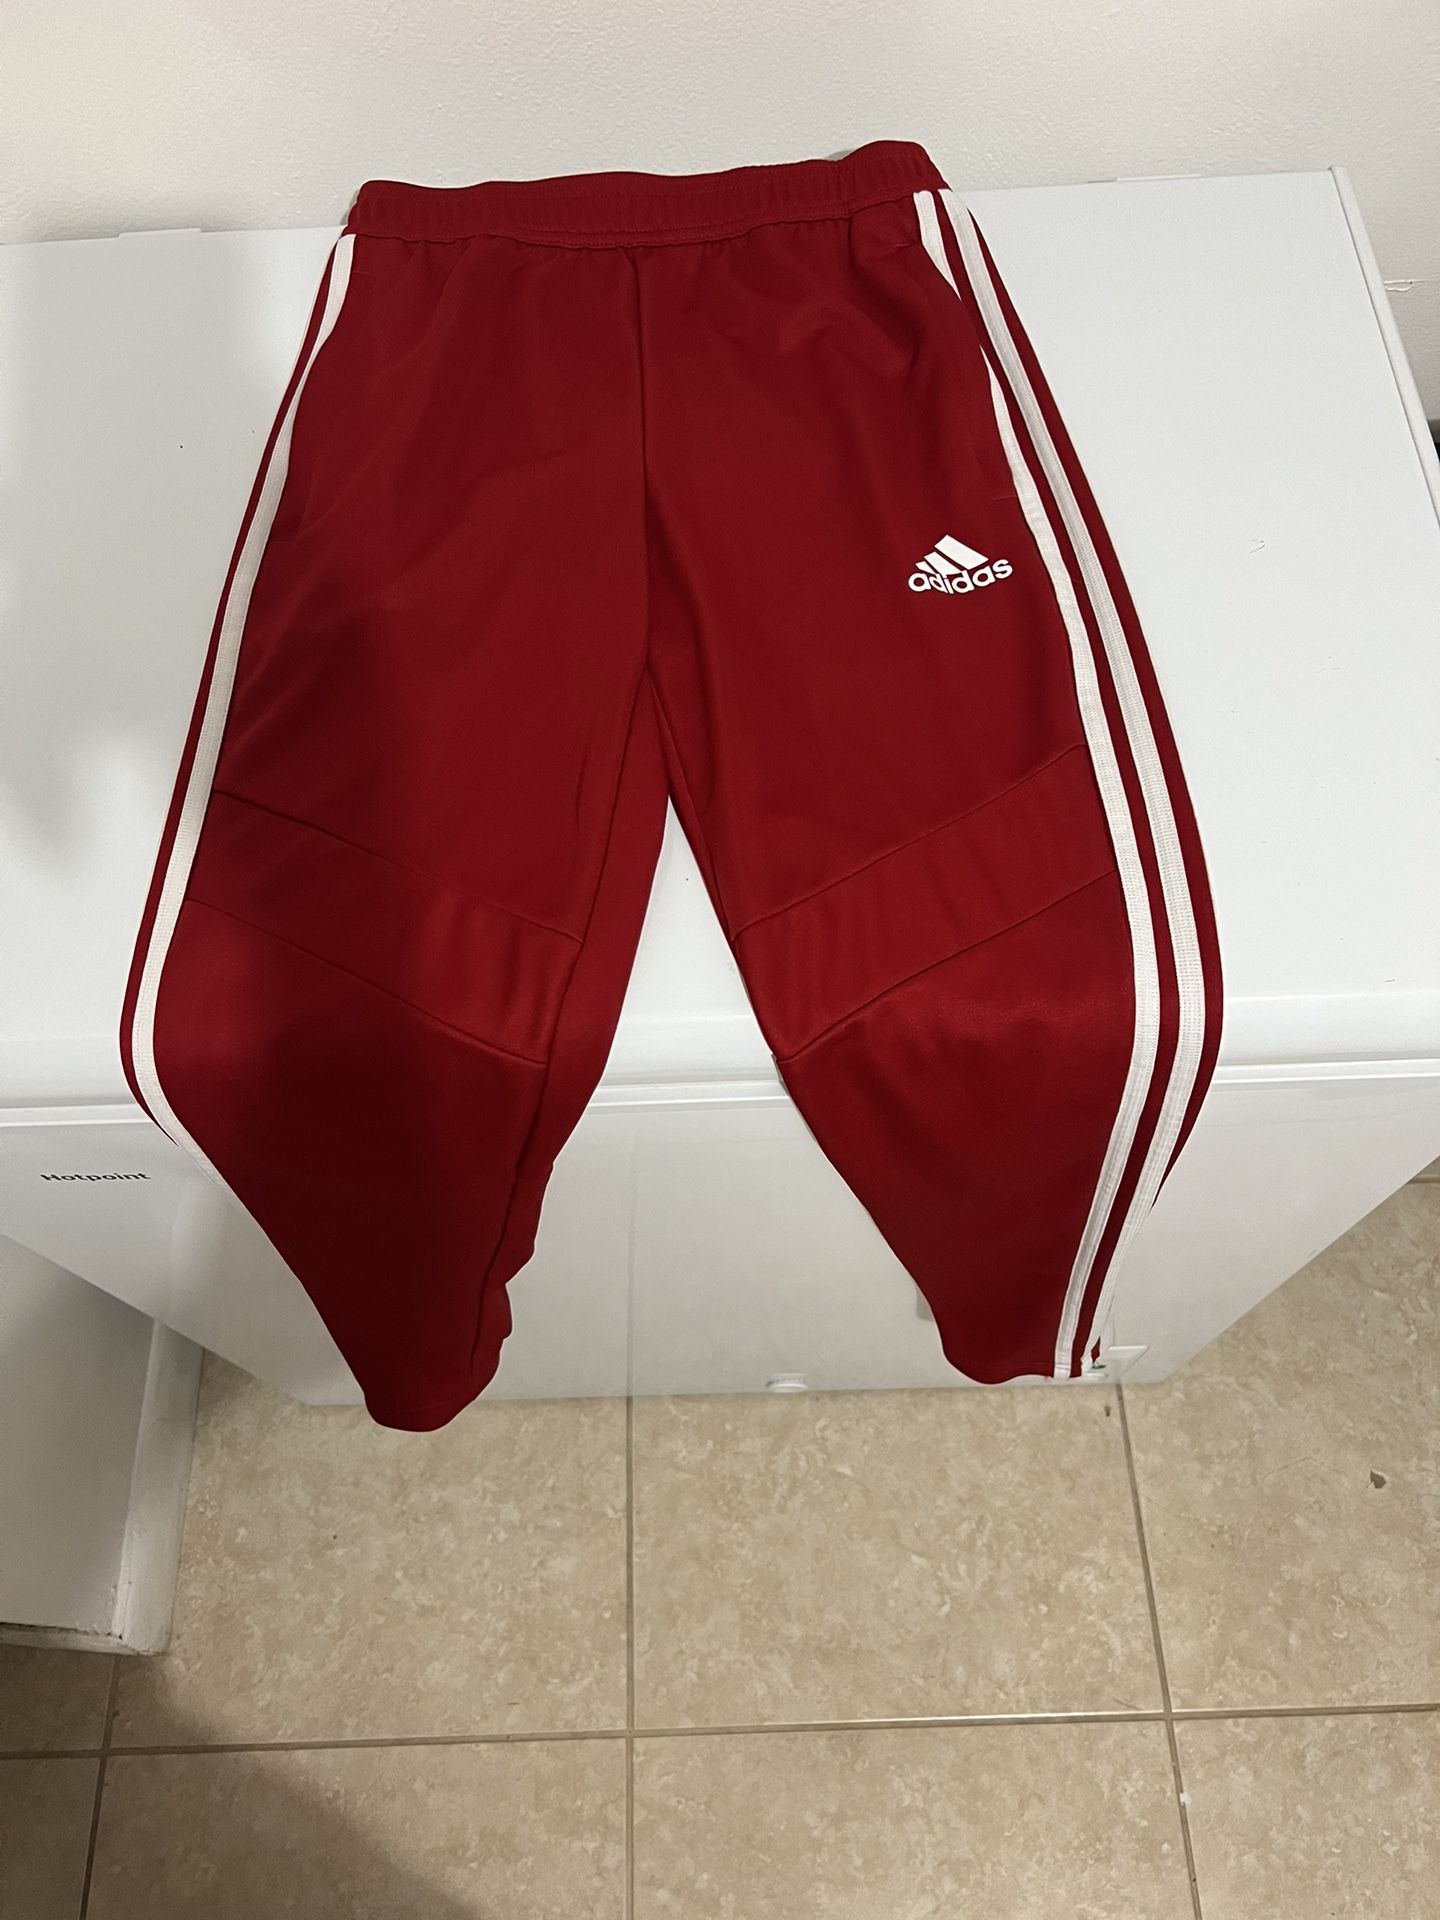 Small Size Adidas Pants $25 